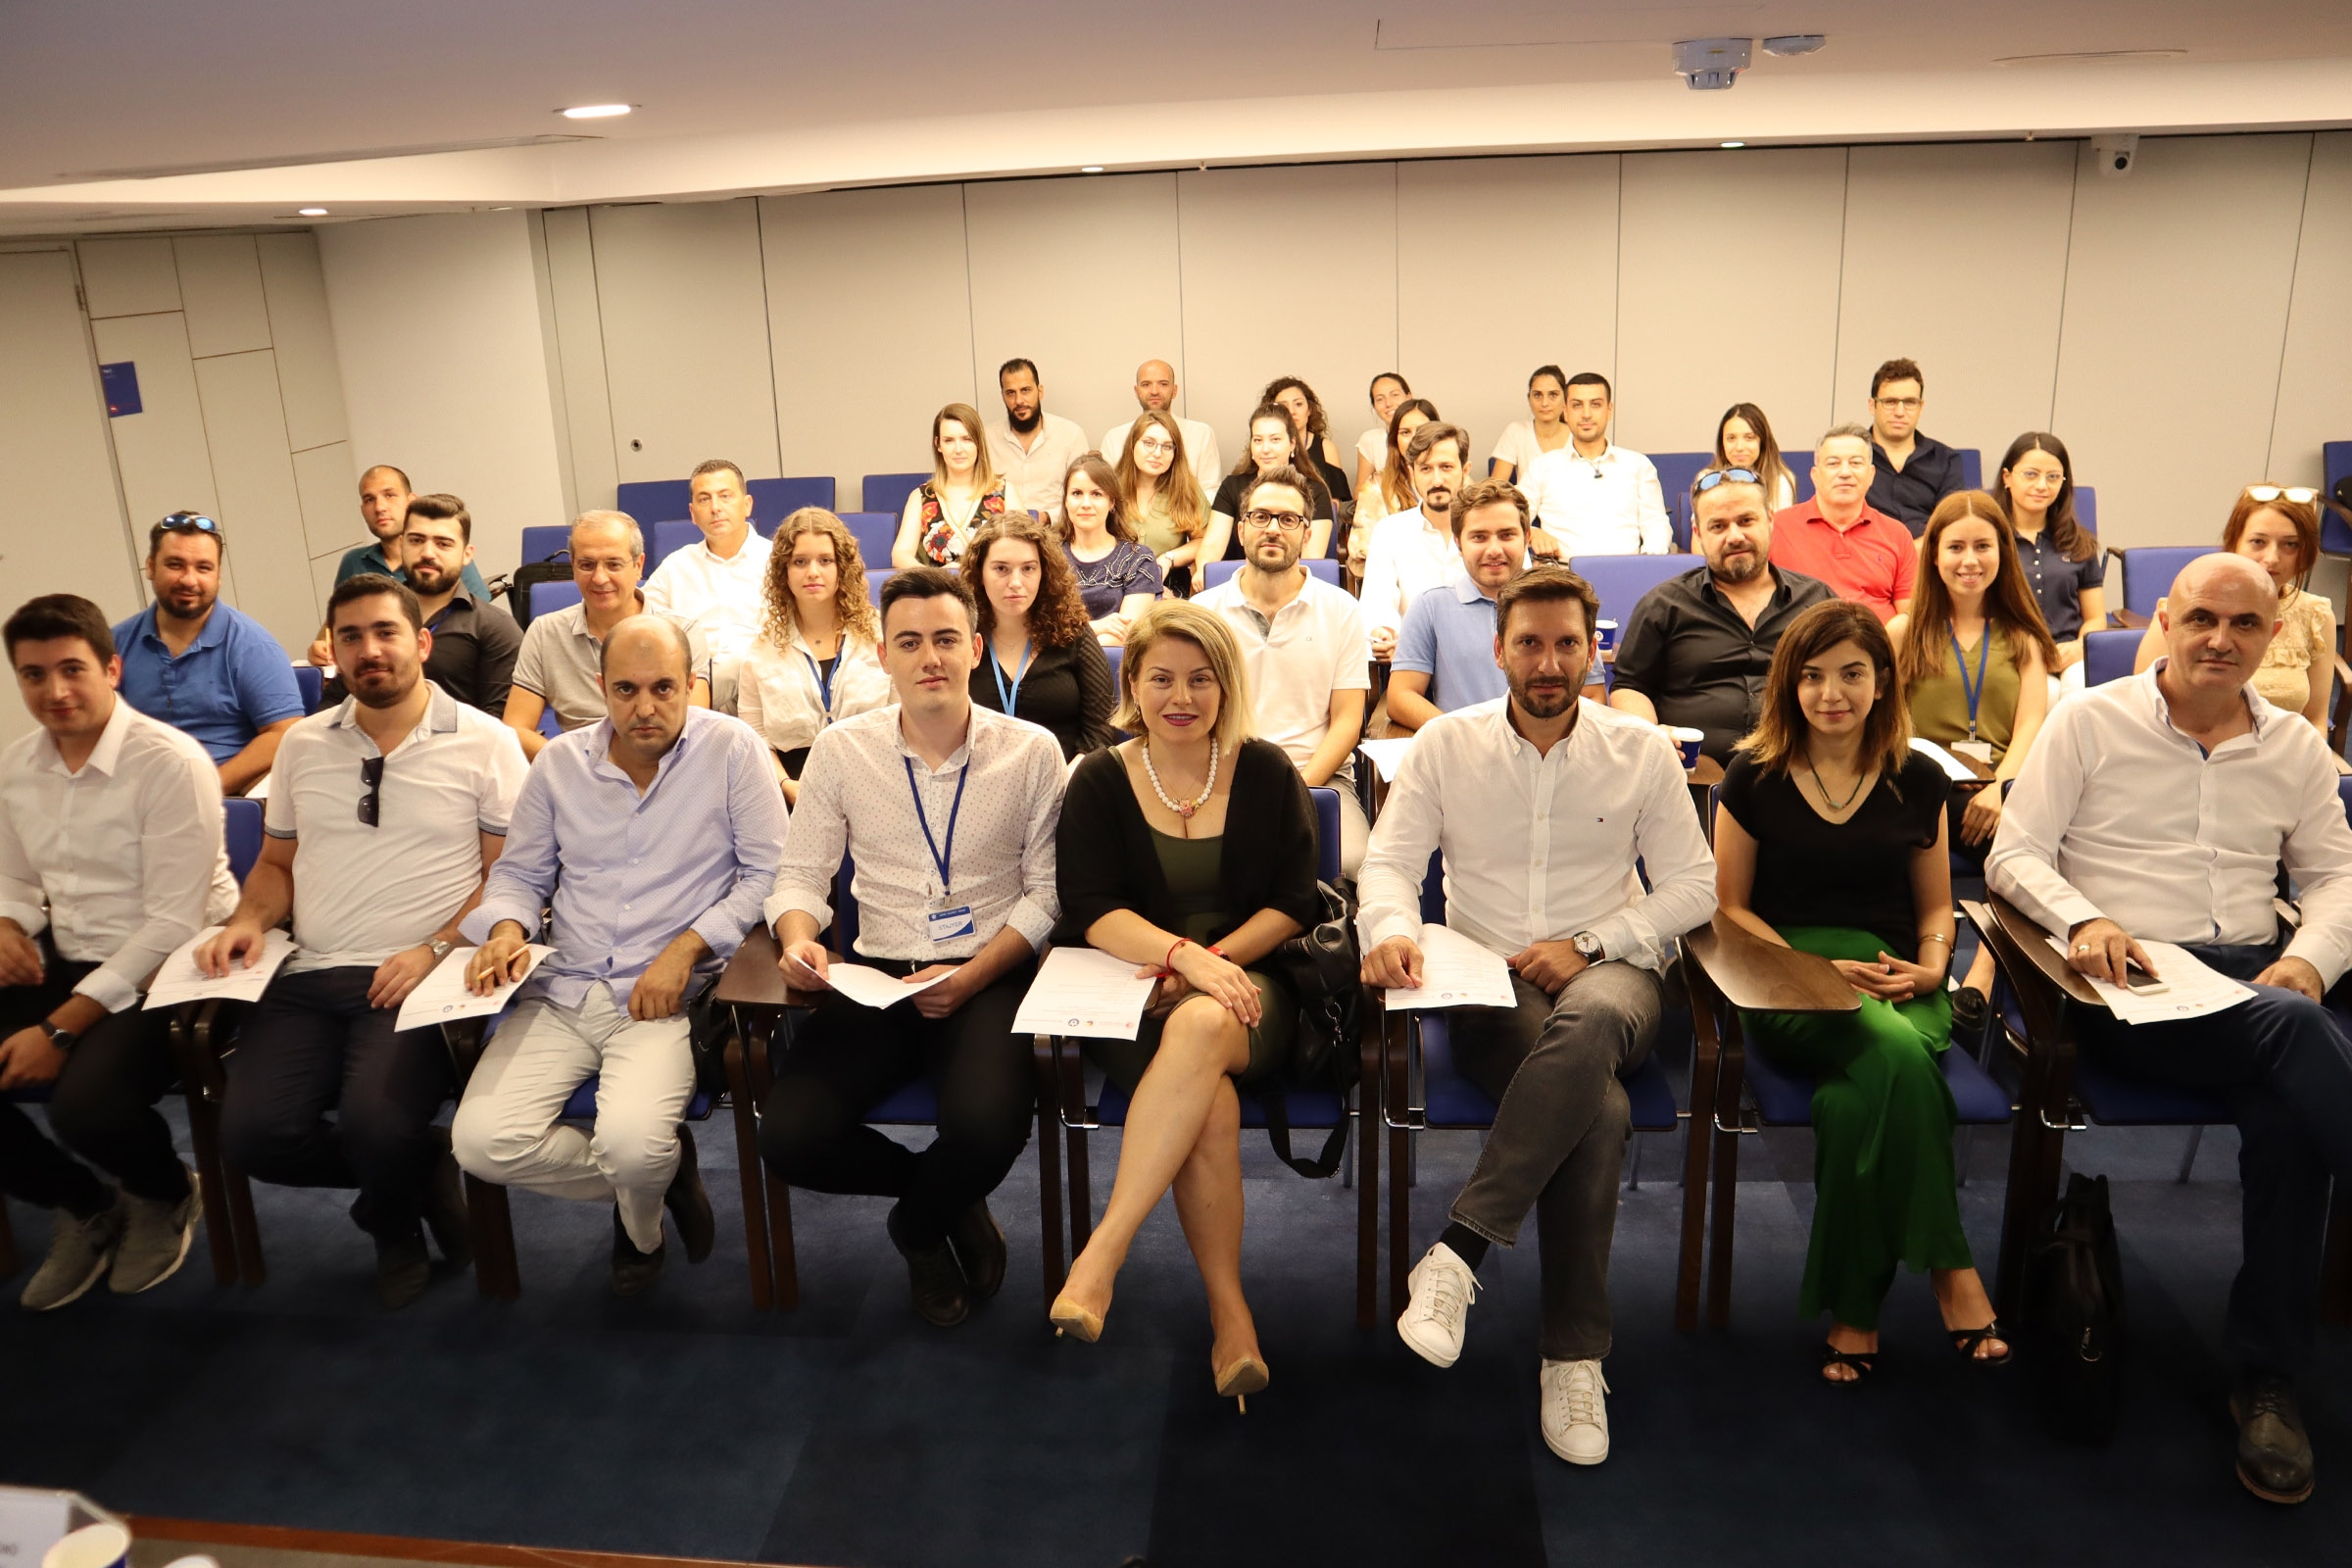 Izmir University of Economics students lead the way in business